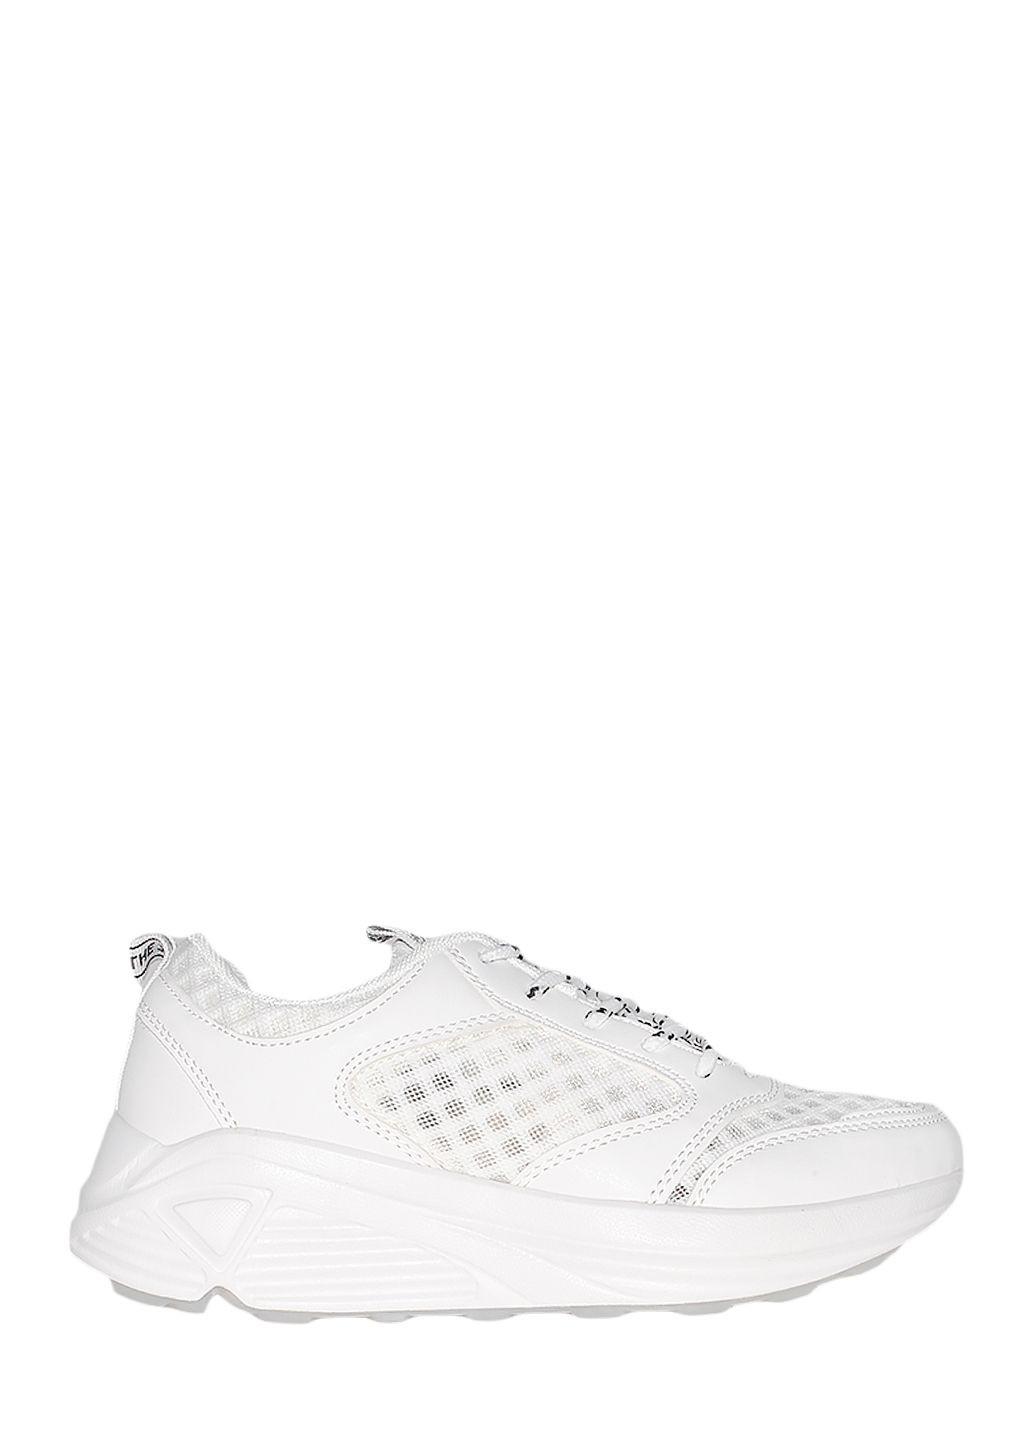 Білі осінні кросівки st8398-8 white Stilli